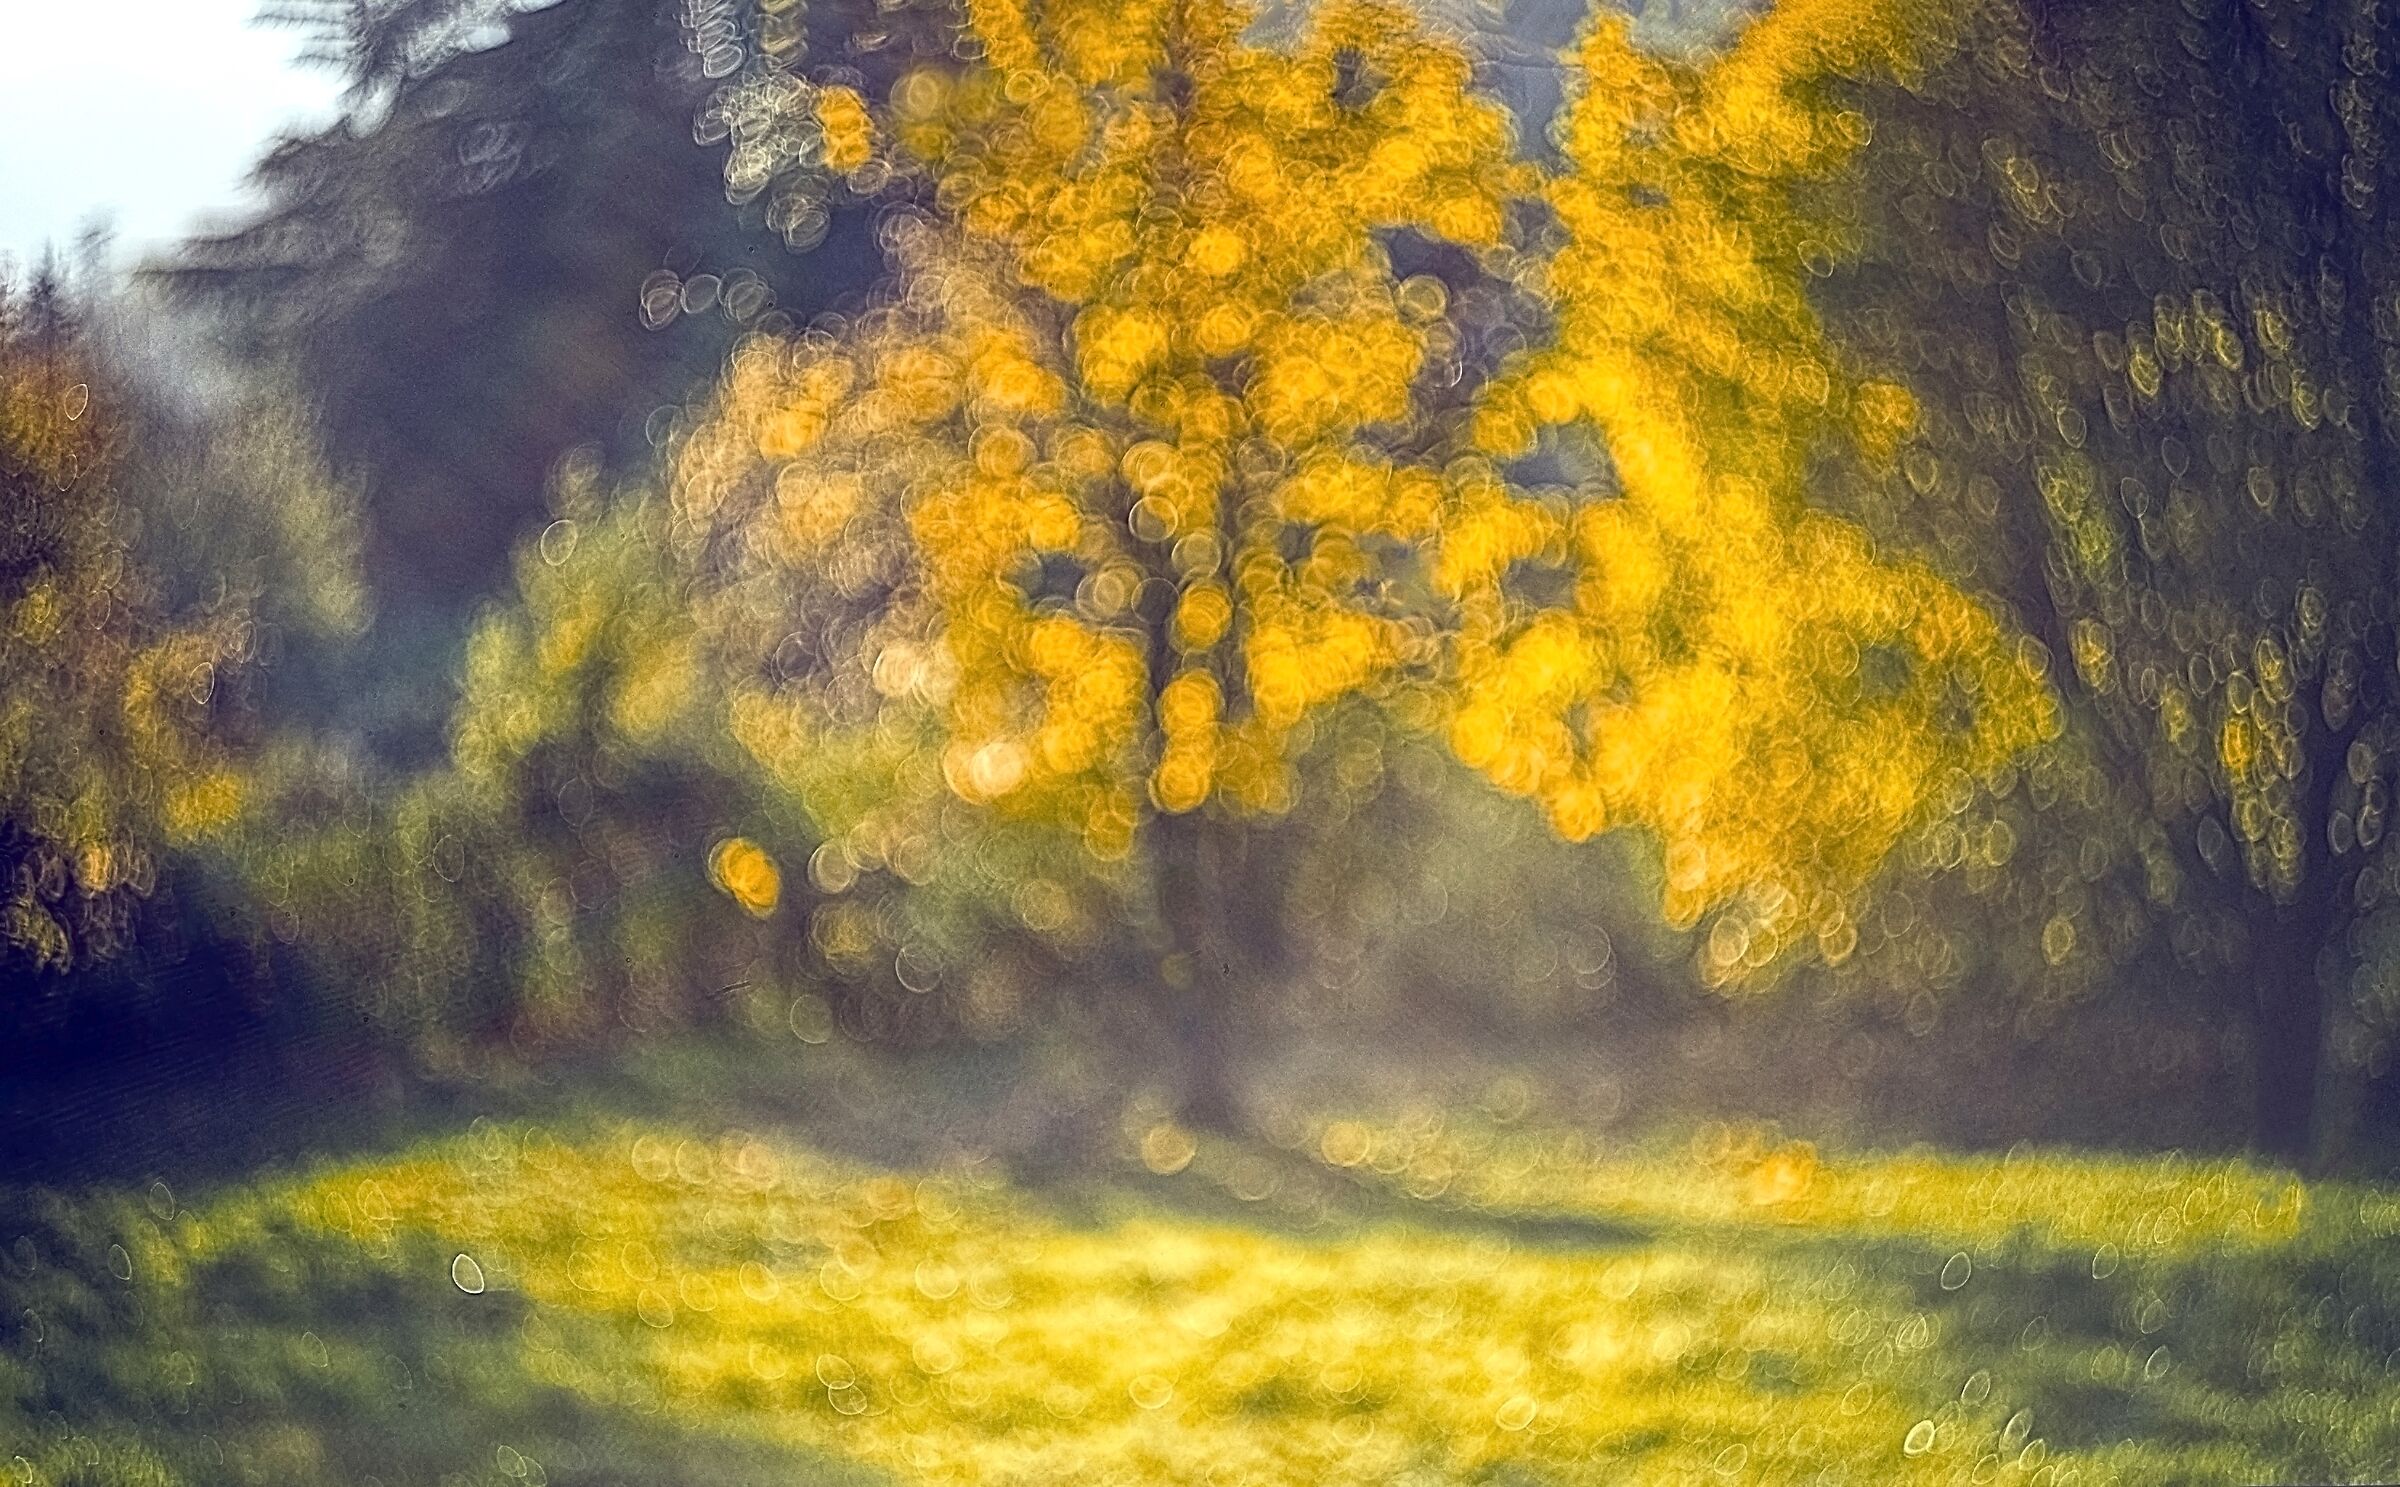 Un Autunno sfocato - A Blurry Autumn...